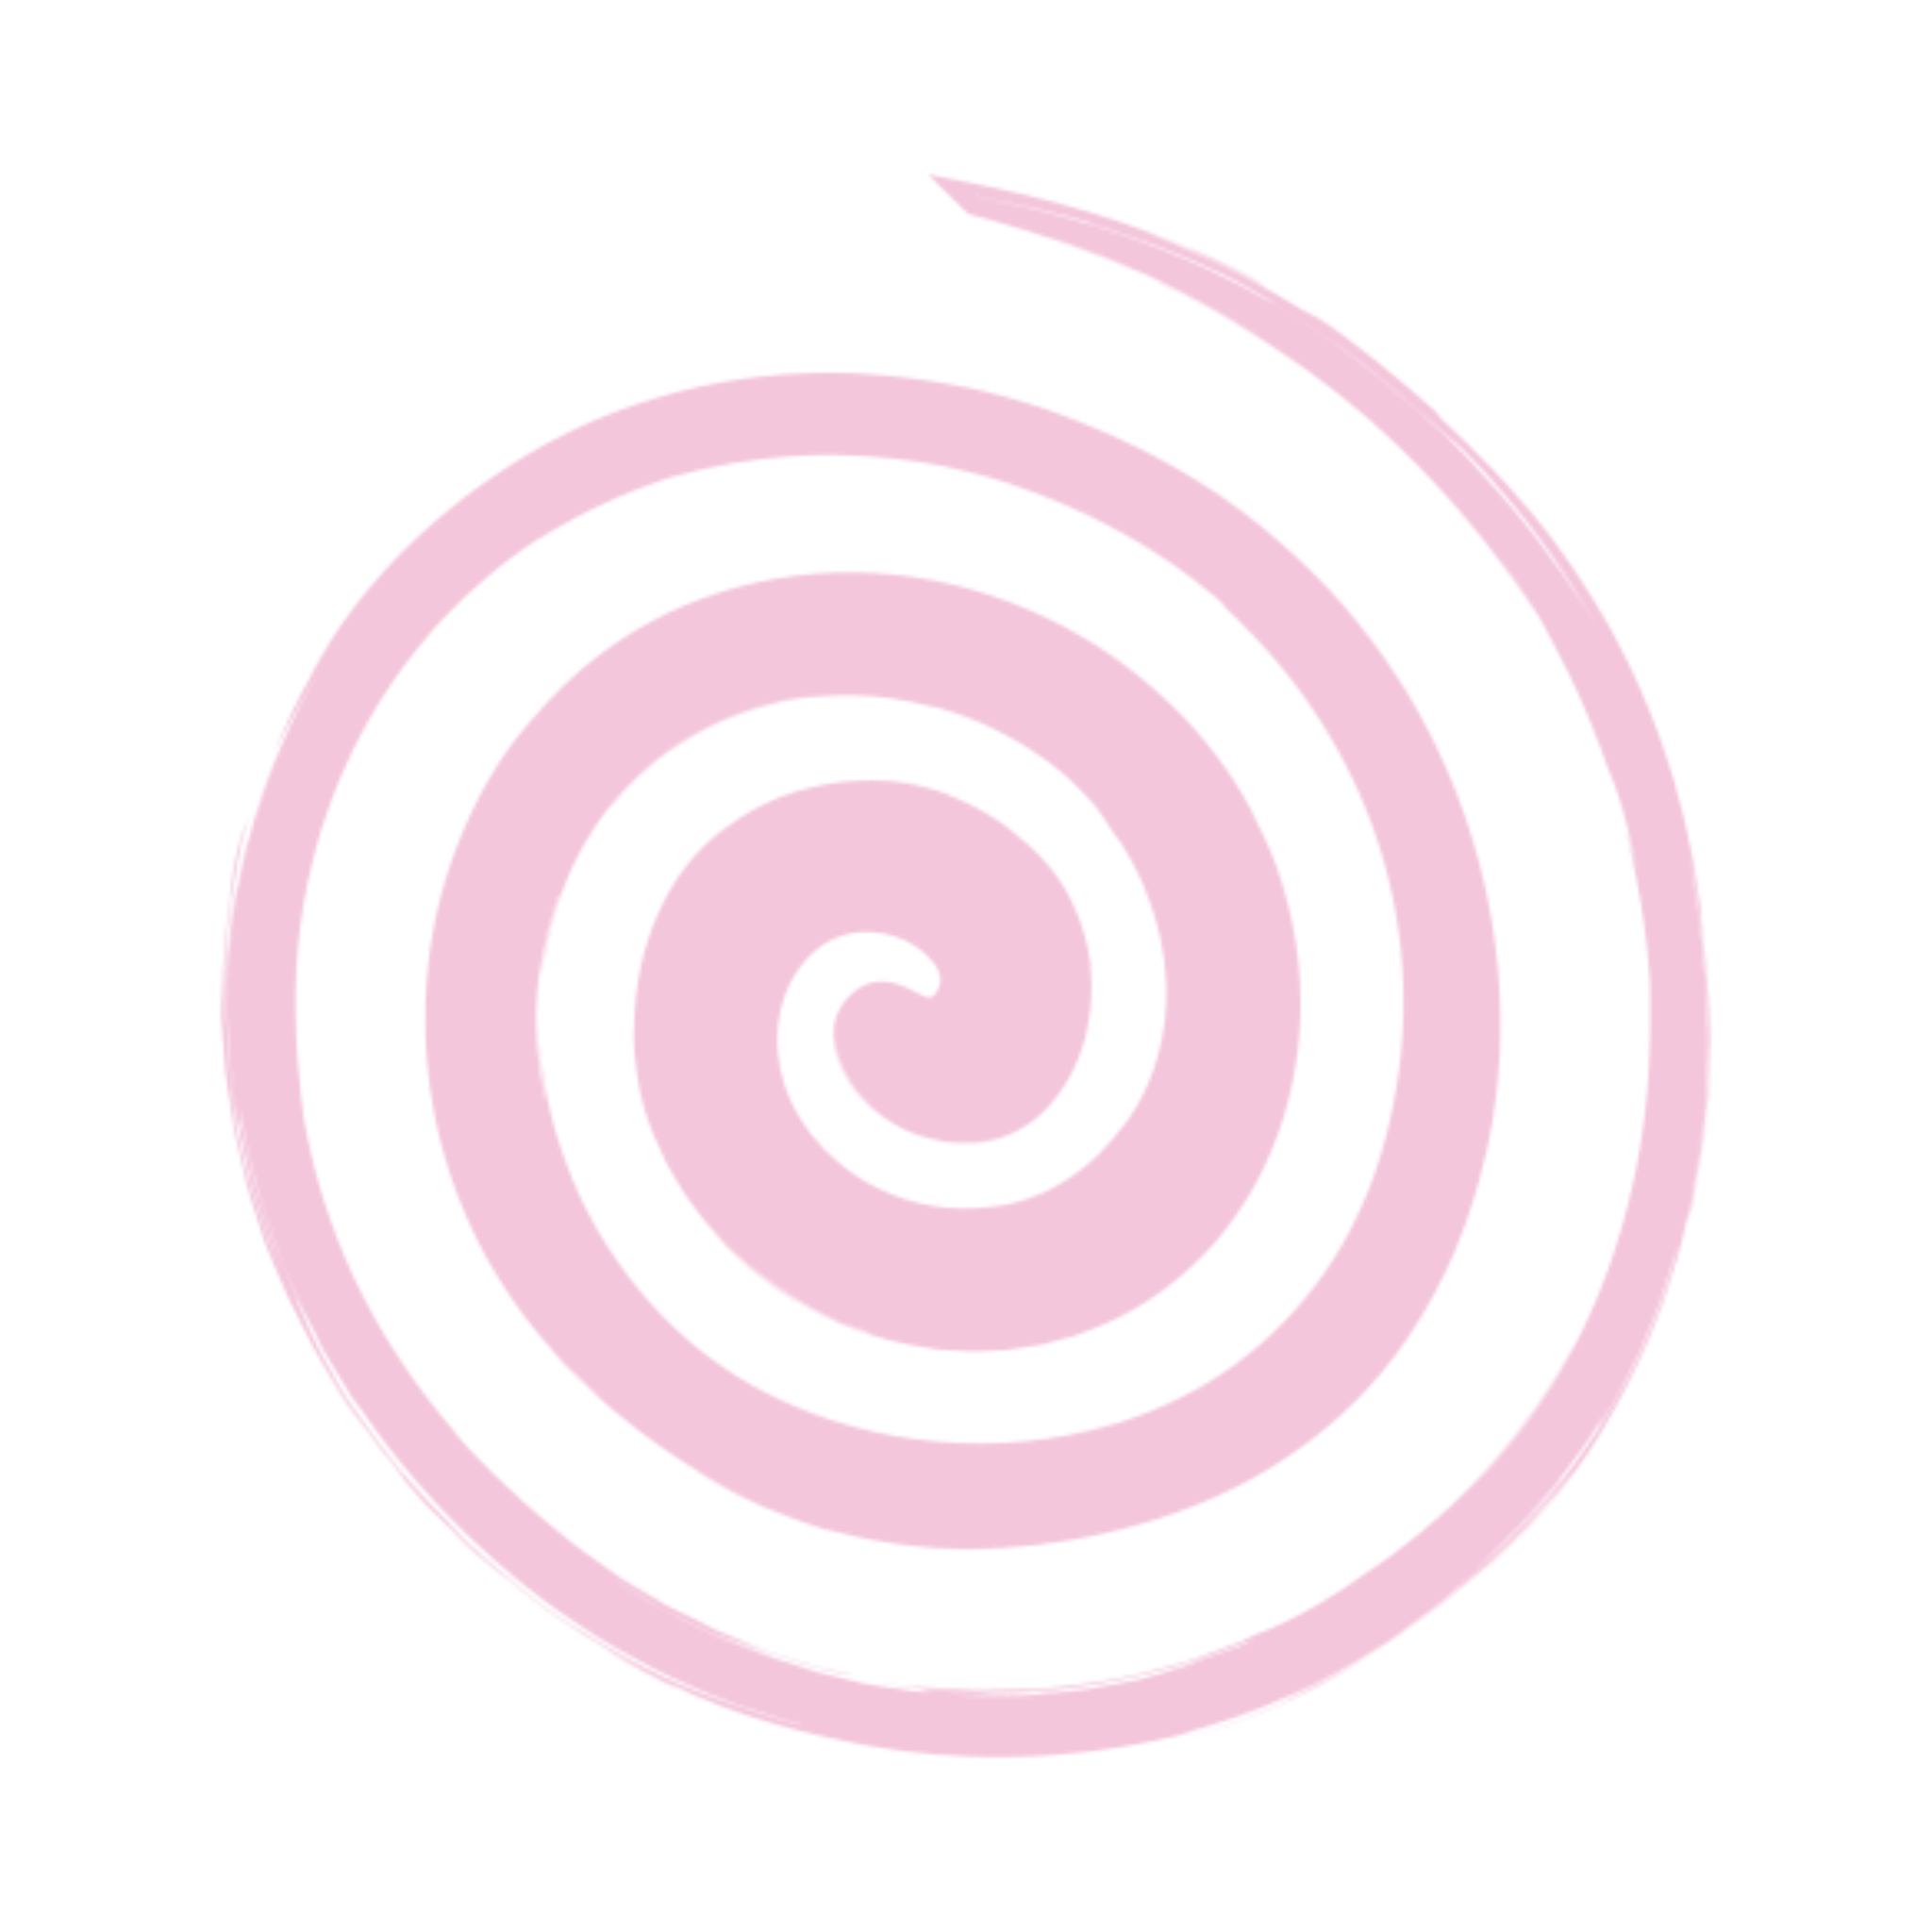 Improving Your Fertility's pink swirl logo